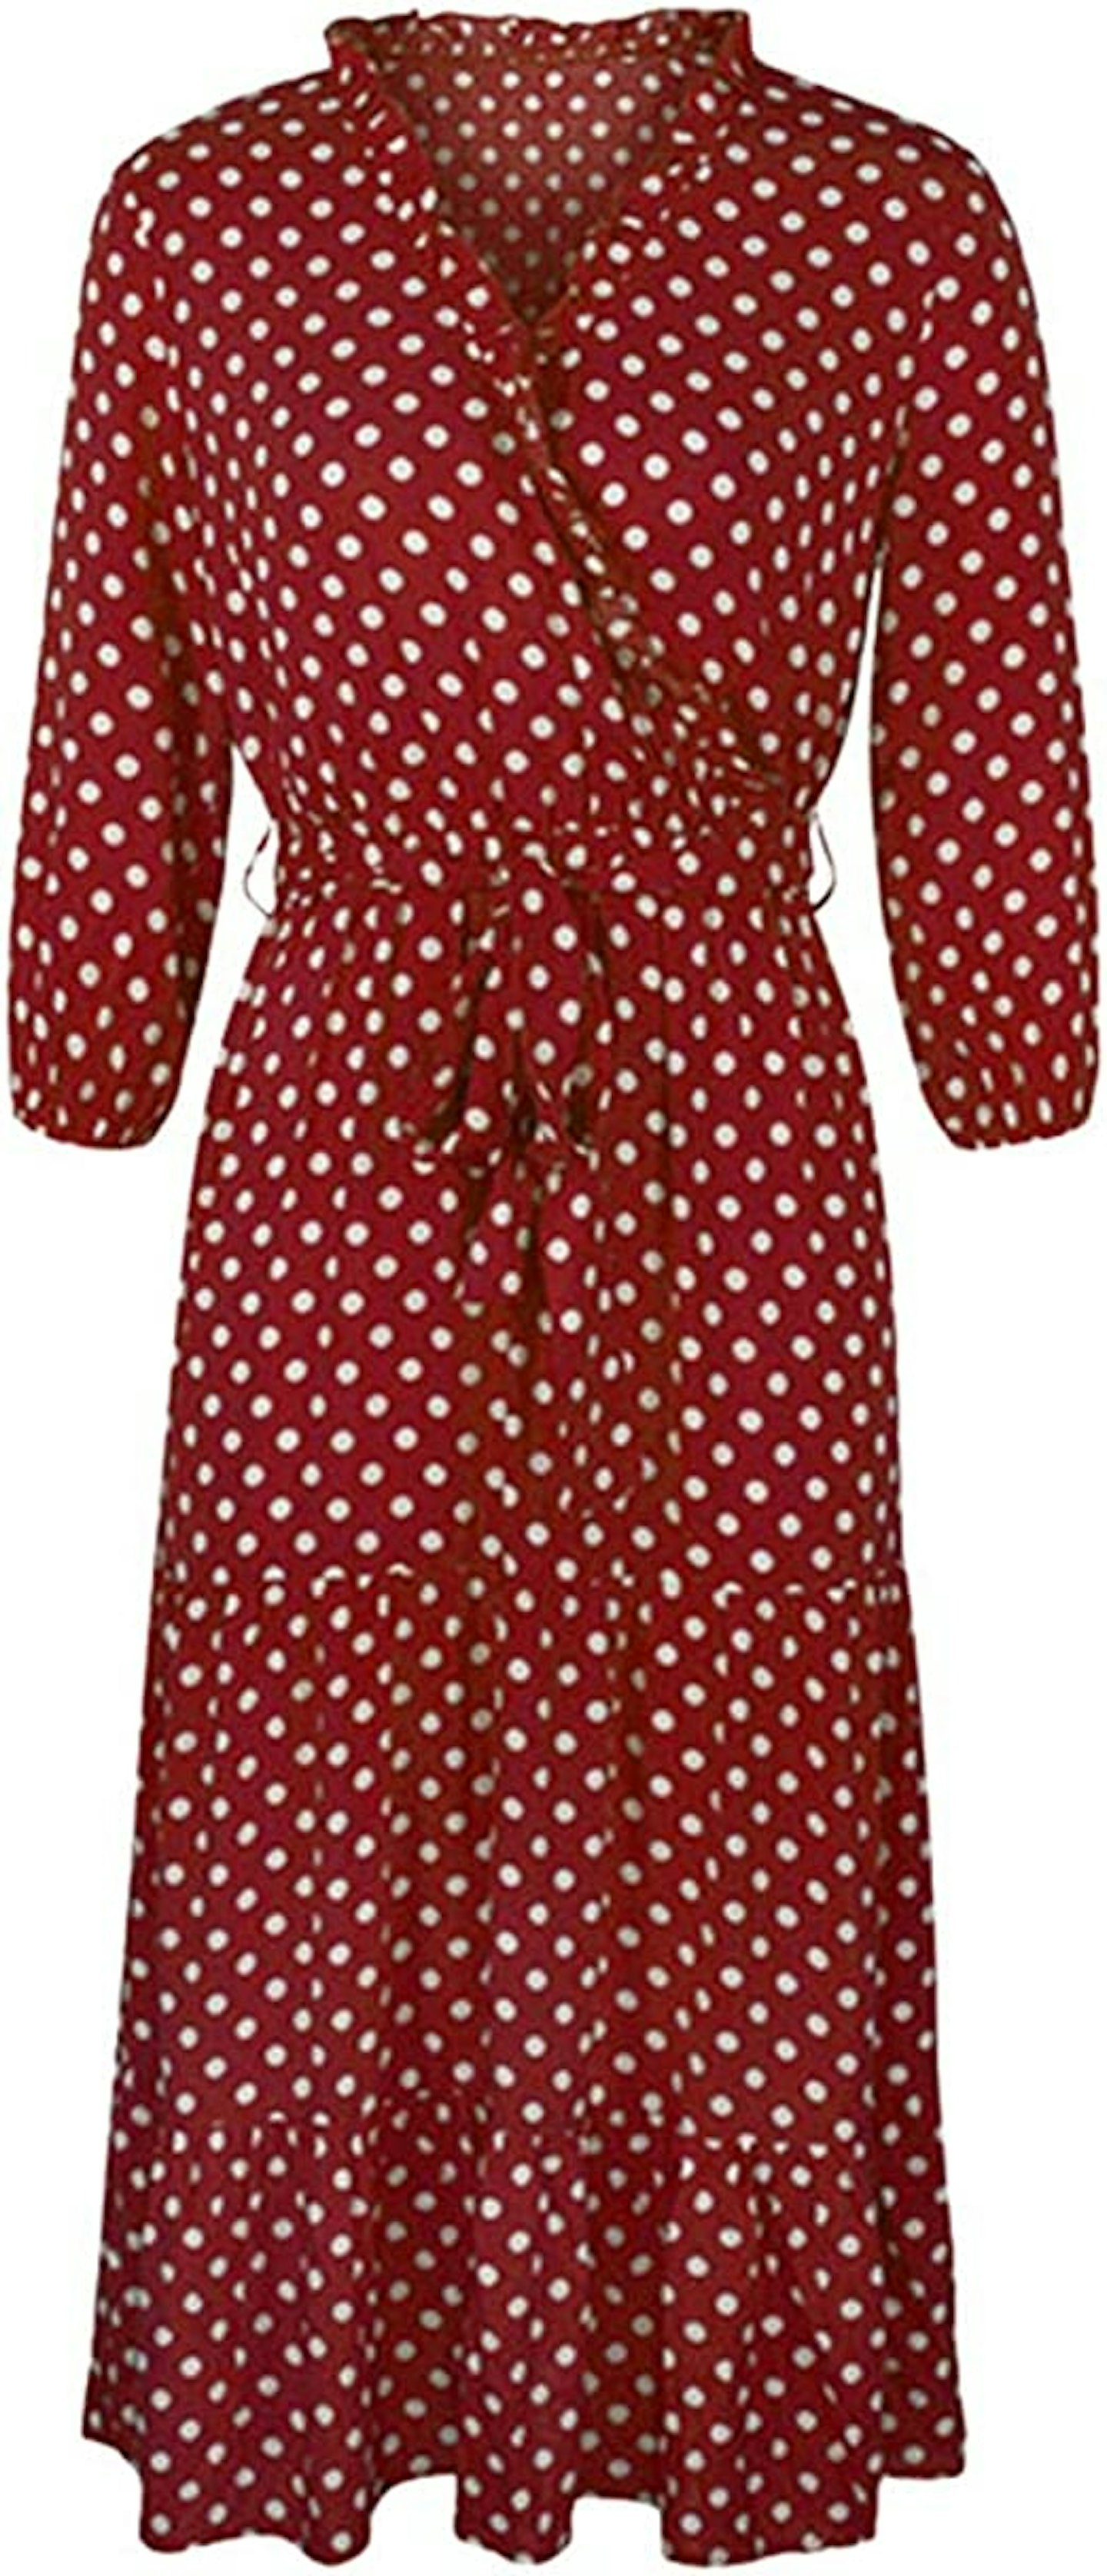 OrientalPort, Polka Dot Dress, WAS £23.49 NOW £18.79